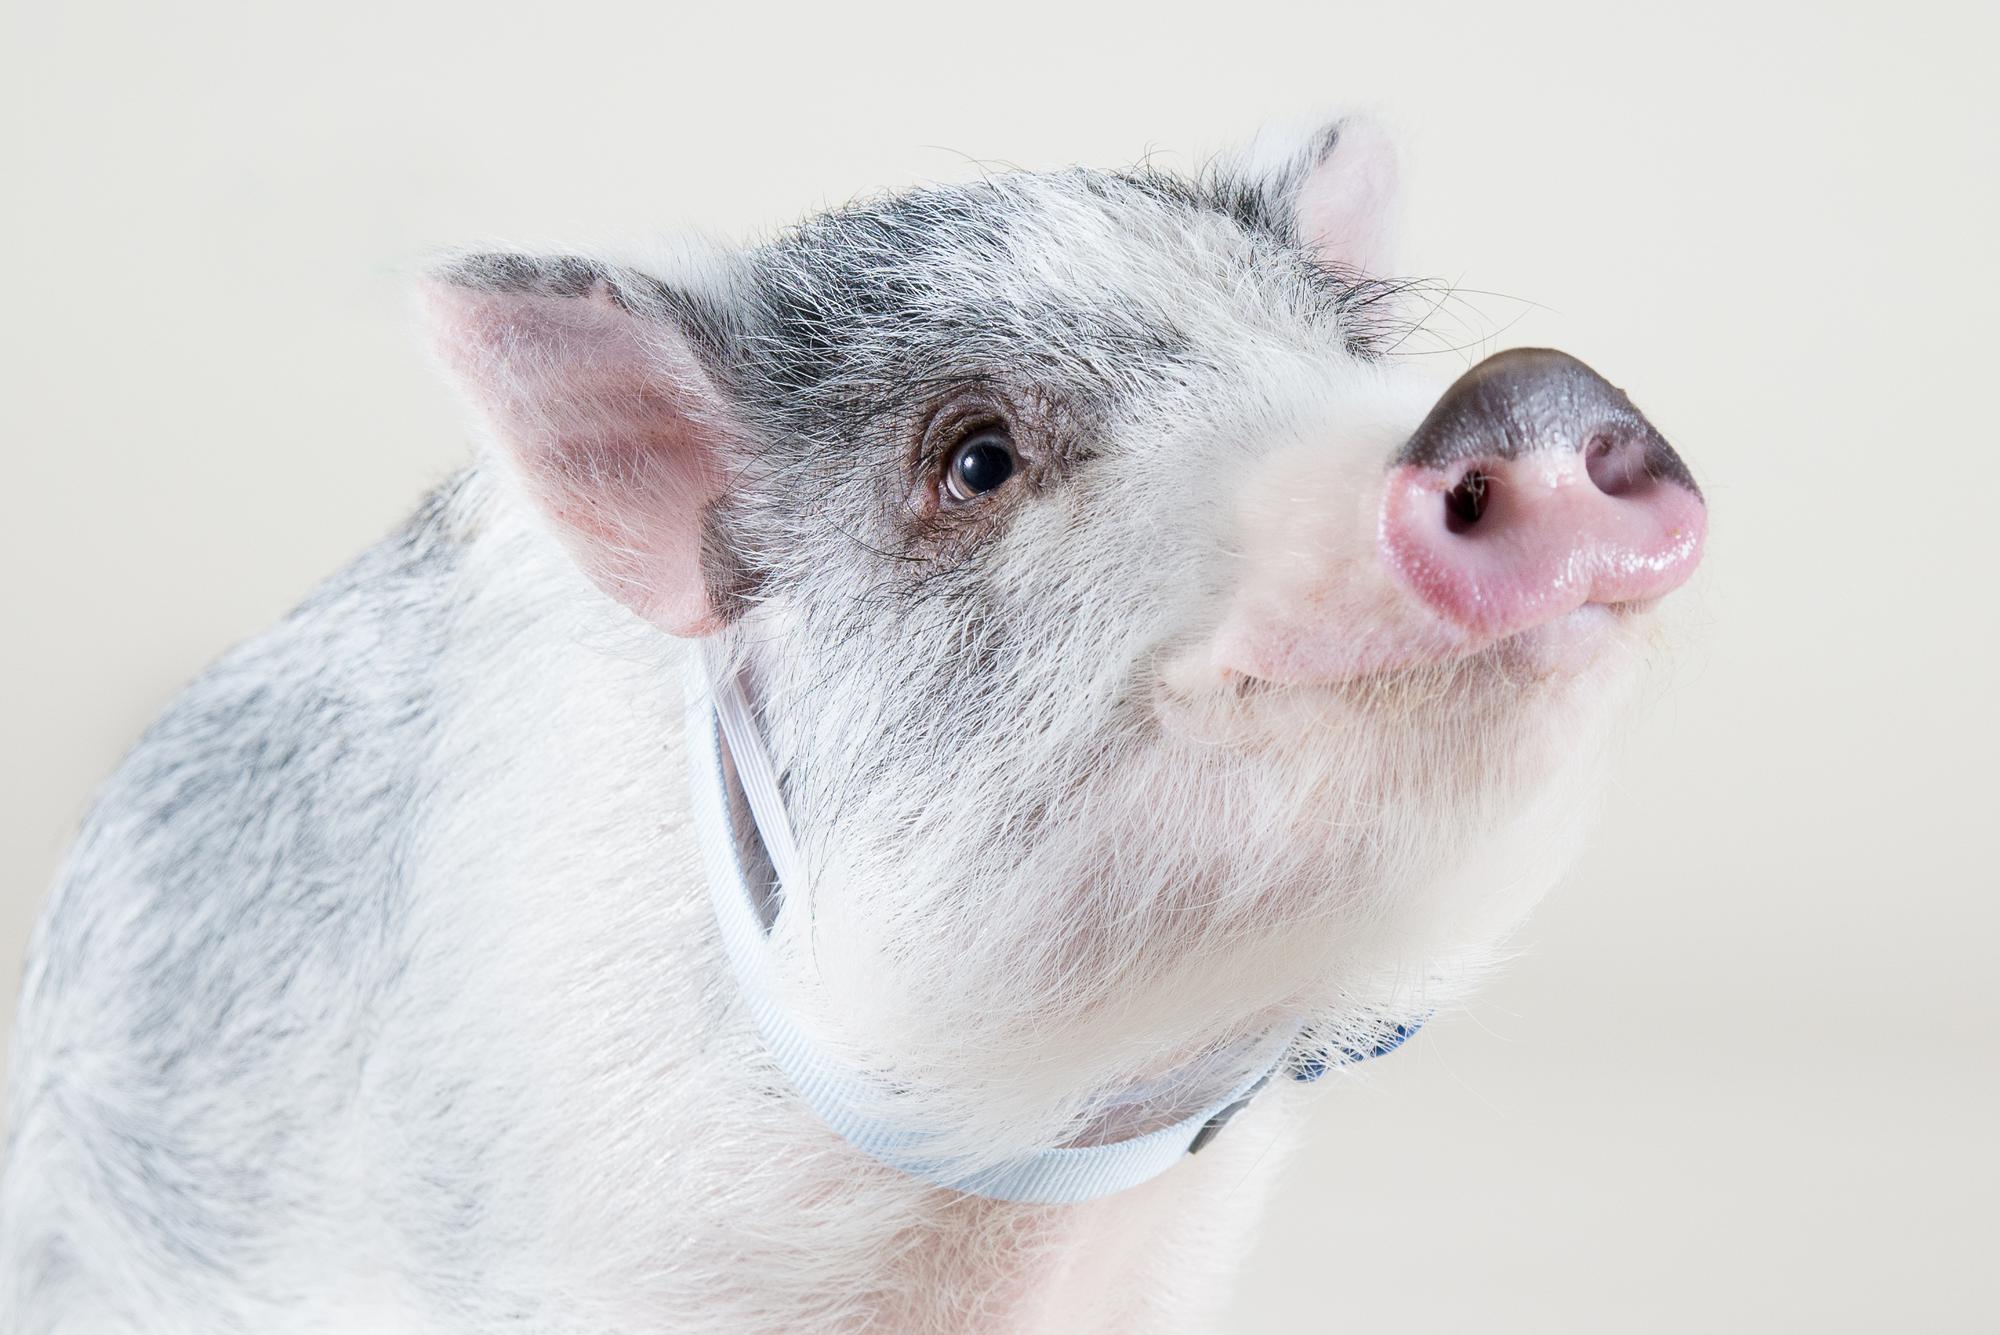 Close up of a mini pig smiling at the camera